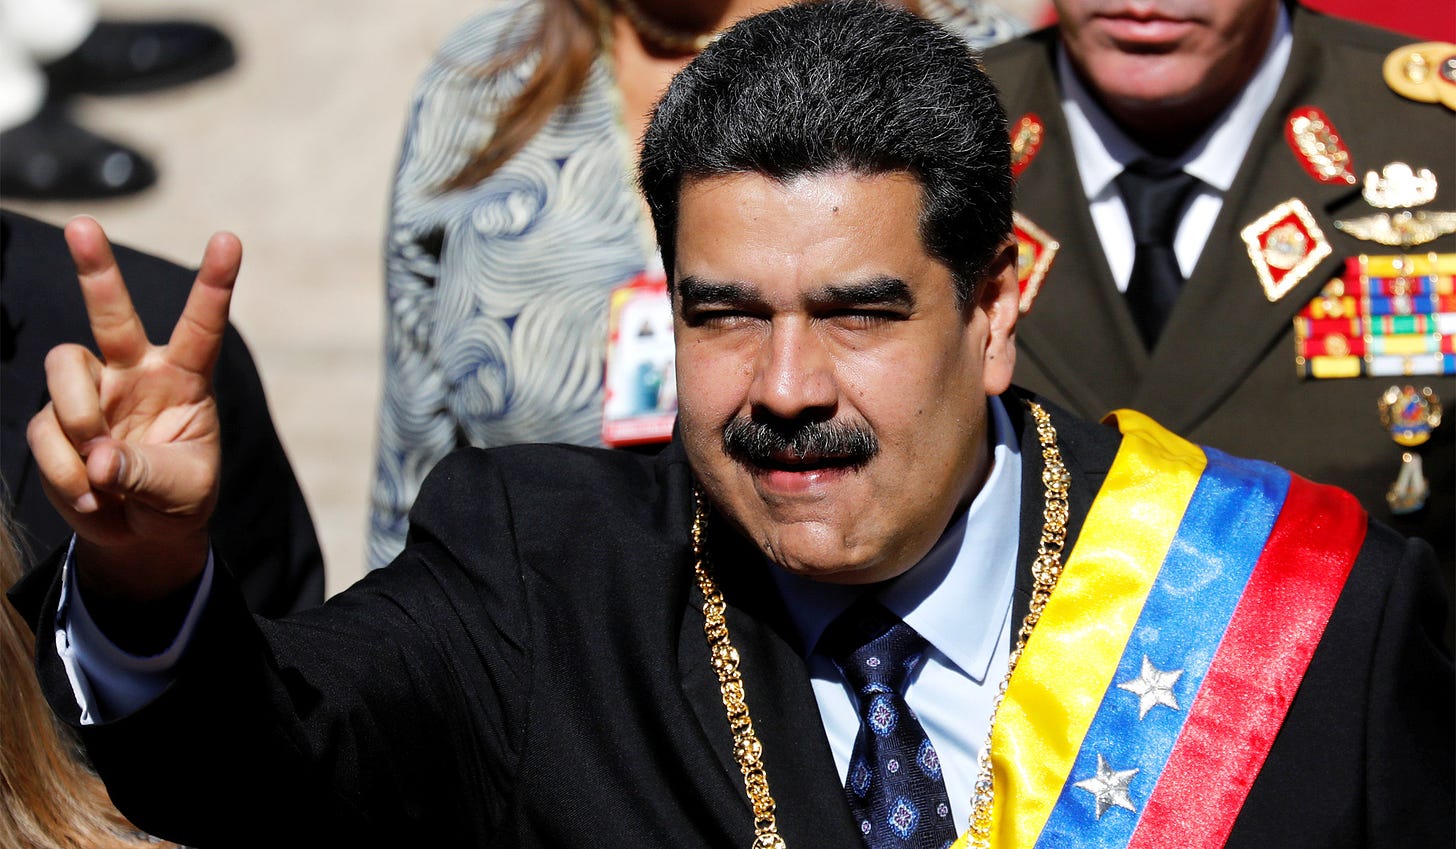 Venezuela: Nicolas Maduro Dictatorship Must End | National Review